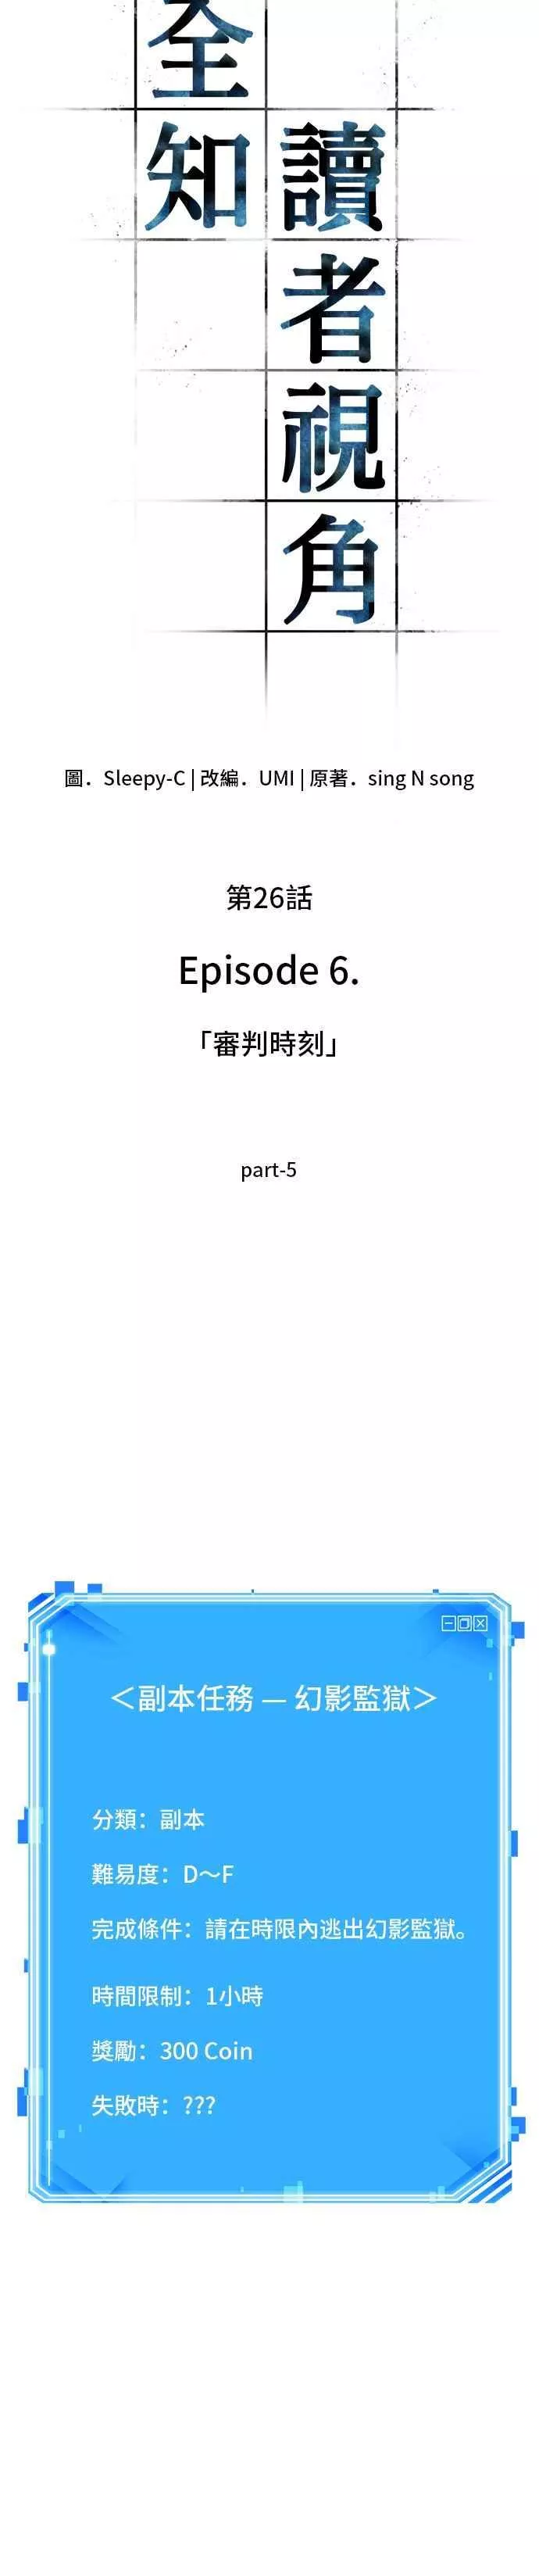 026. Ep.06 审判时刻 (5)1